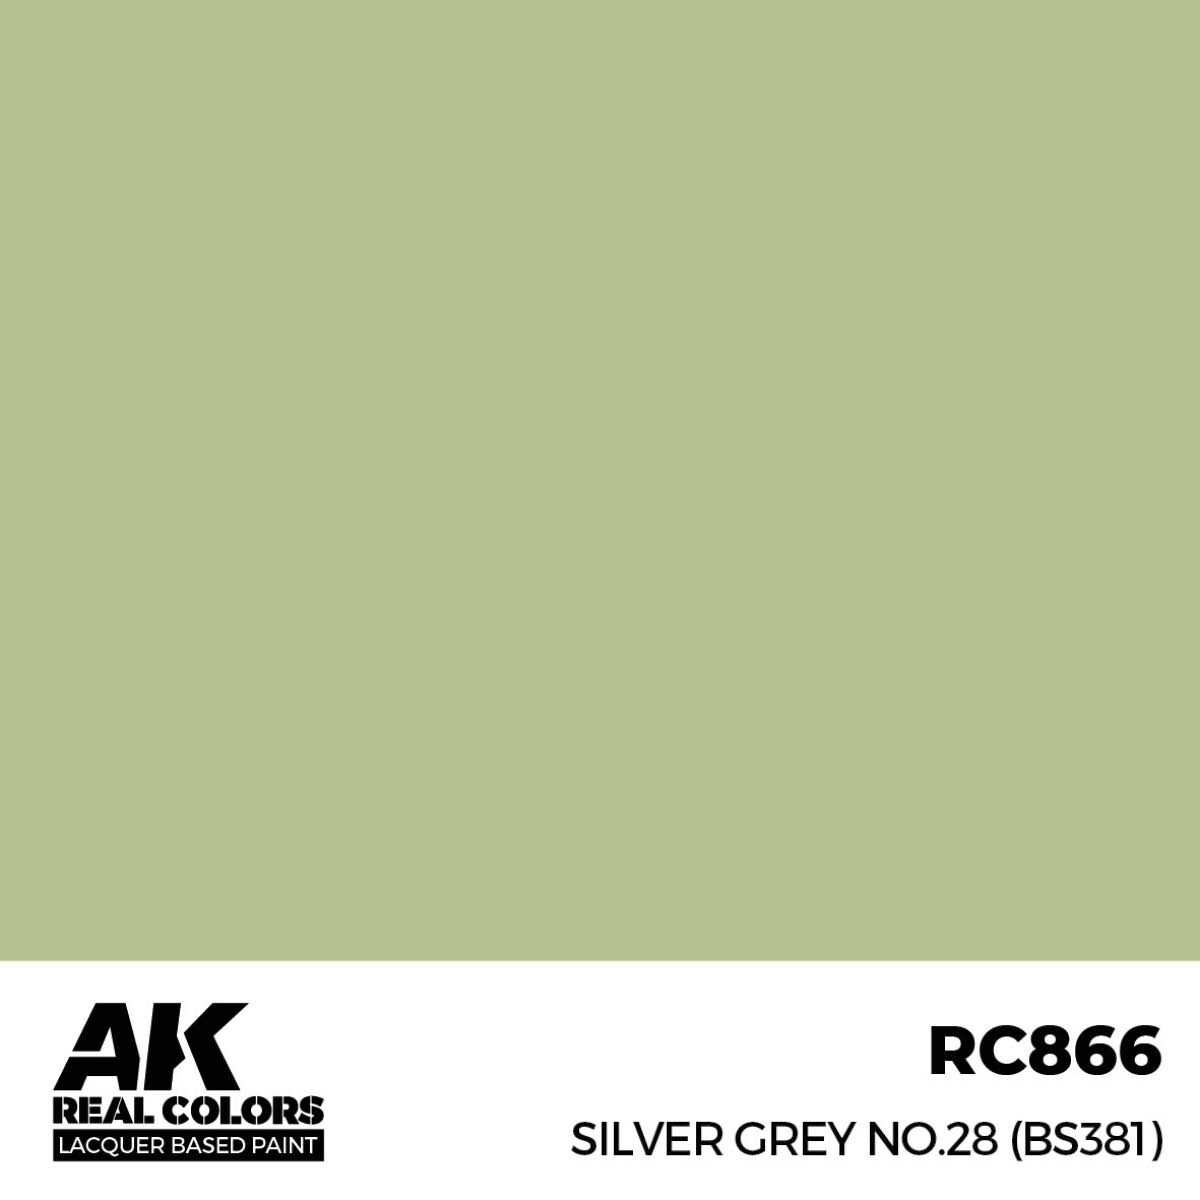 AK RC866 Real Colors Silver Grey No.28 (BS381) 17 ml.